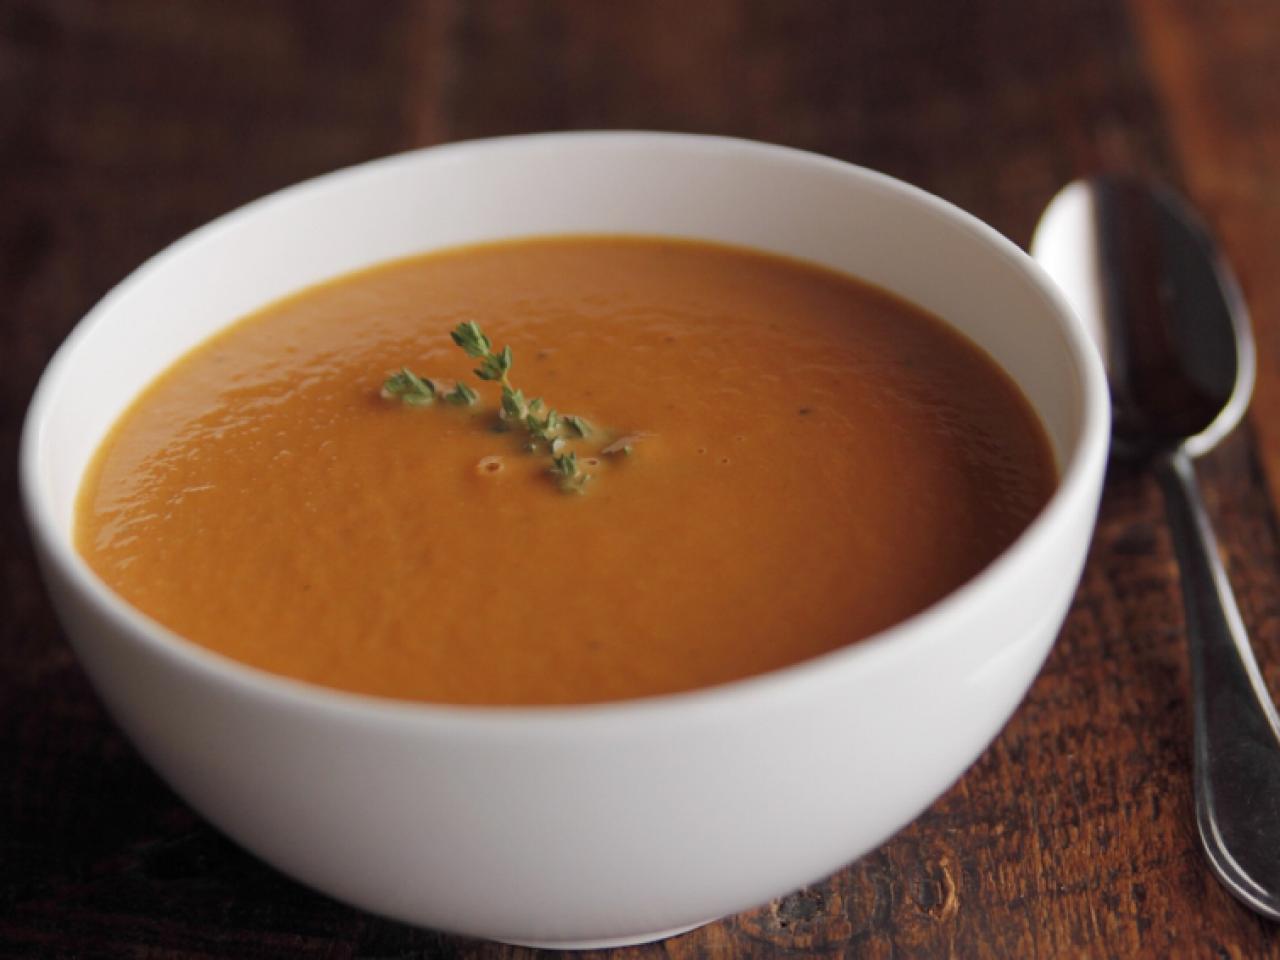 https://food.fnr.sndimg.com/content/dam/images/food/fullset/2013/8/7/0/WU0507H_carrot-thyme-soup-with-cream-recipe_s4x3.jpg.rend.hgtvcom.1280.960.suffix/1383780737955.jpeg